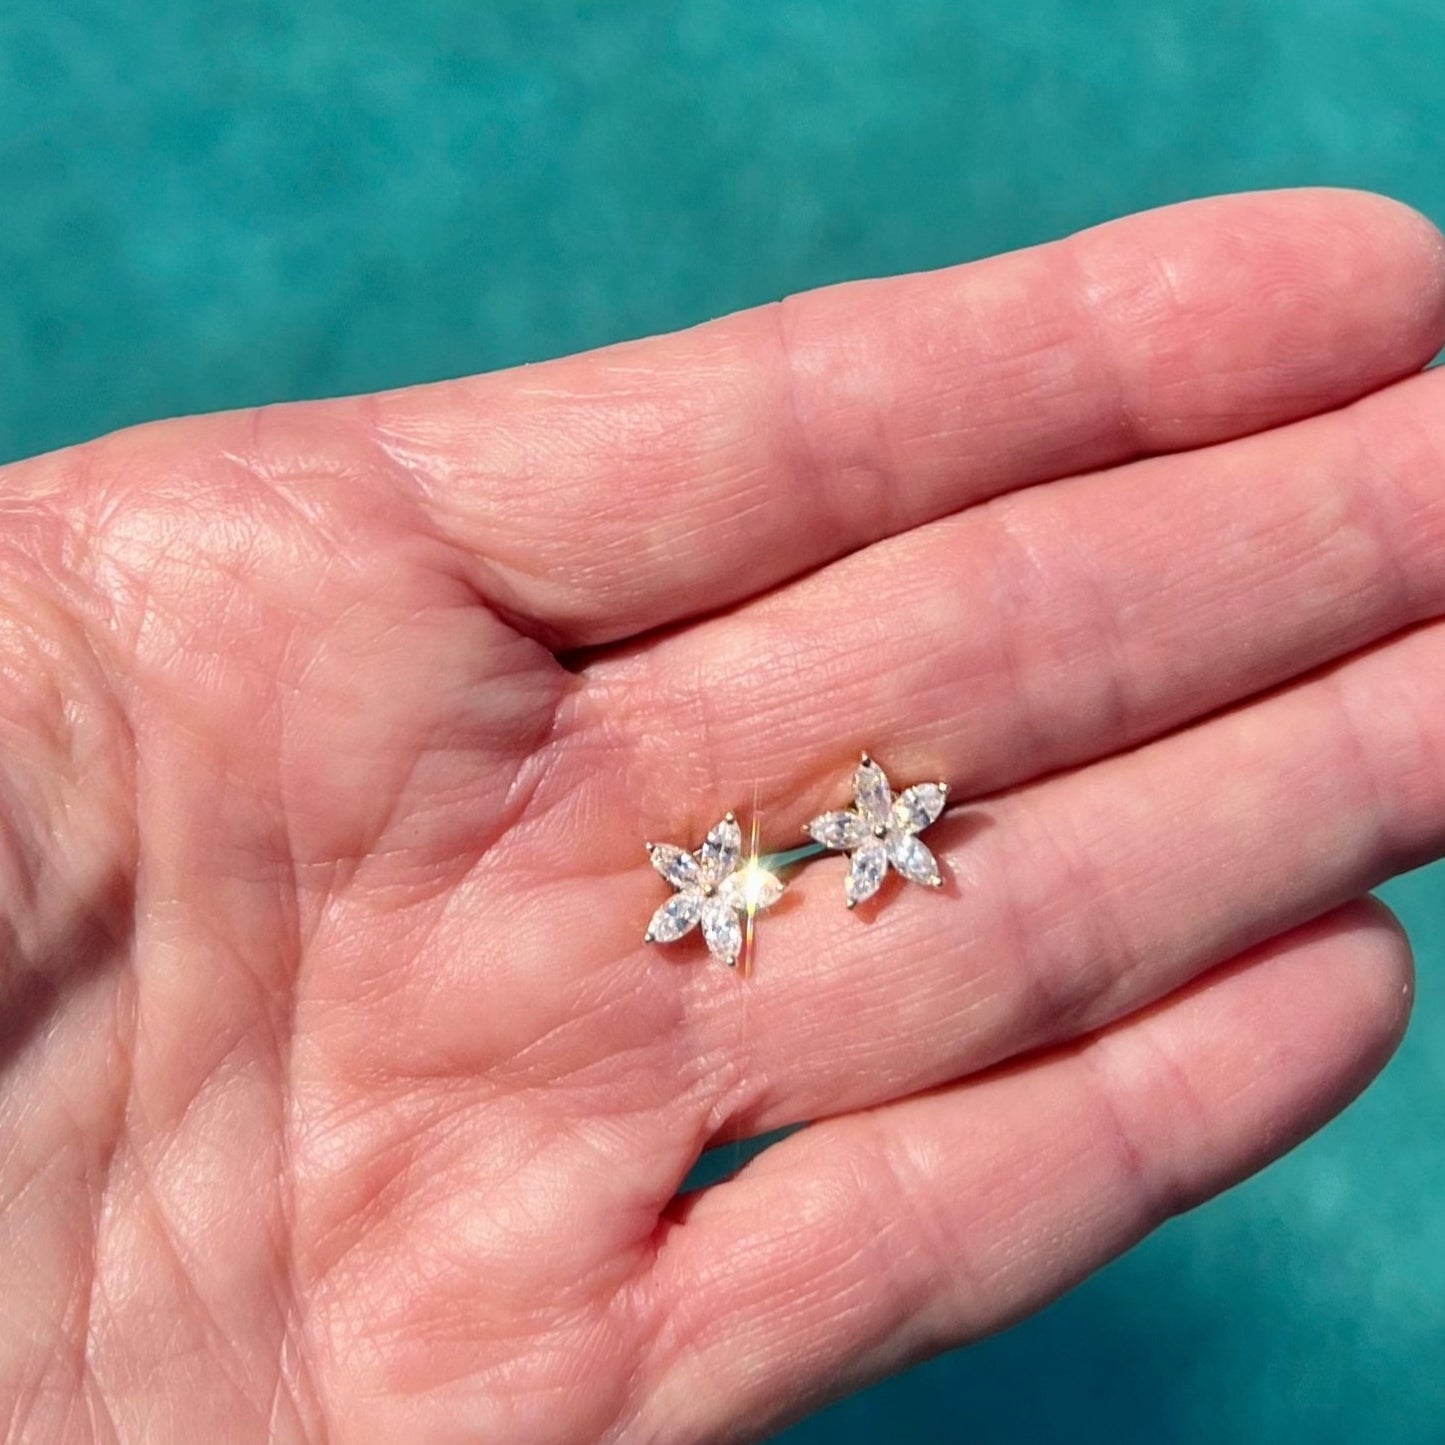 Marquise Diamond Flower Earrings